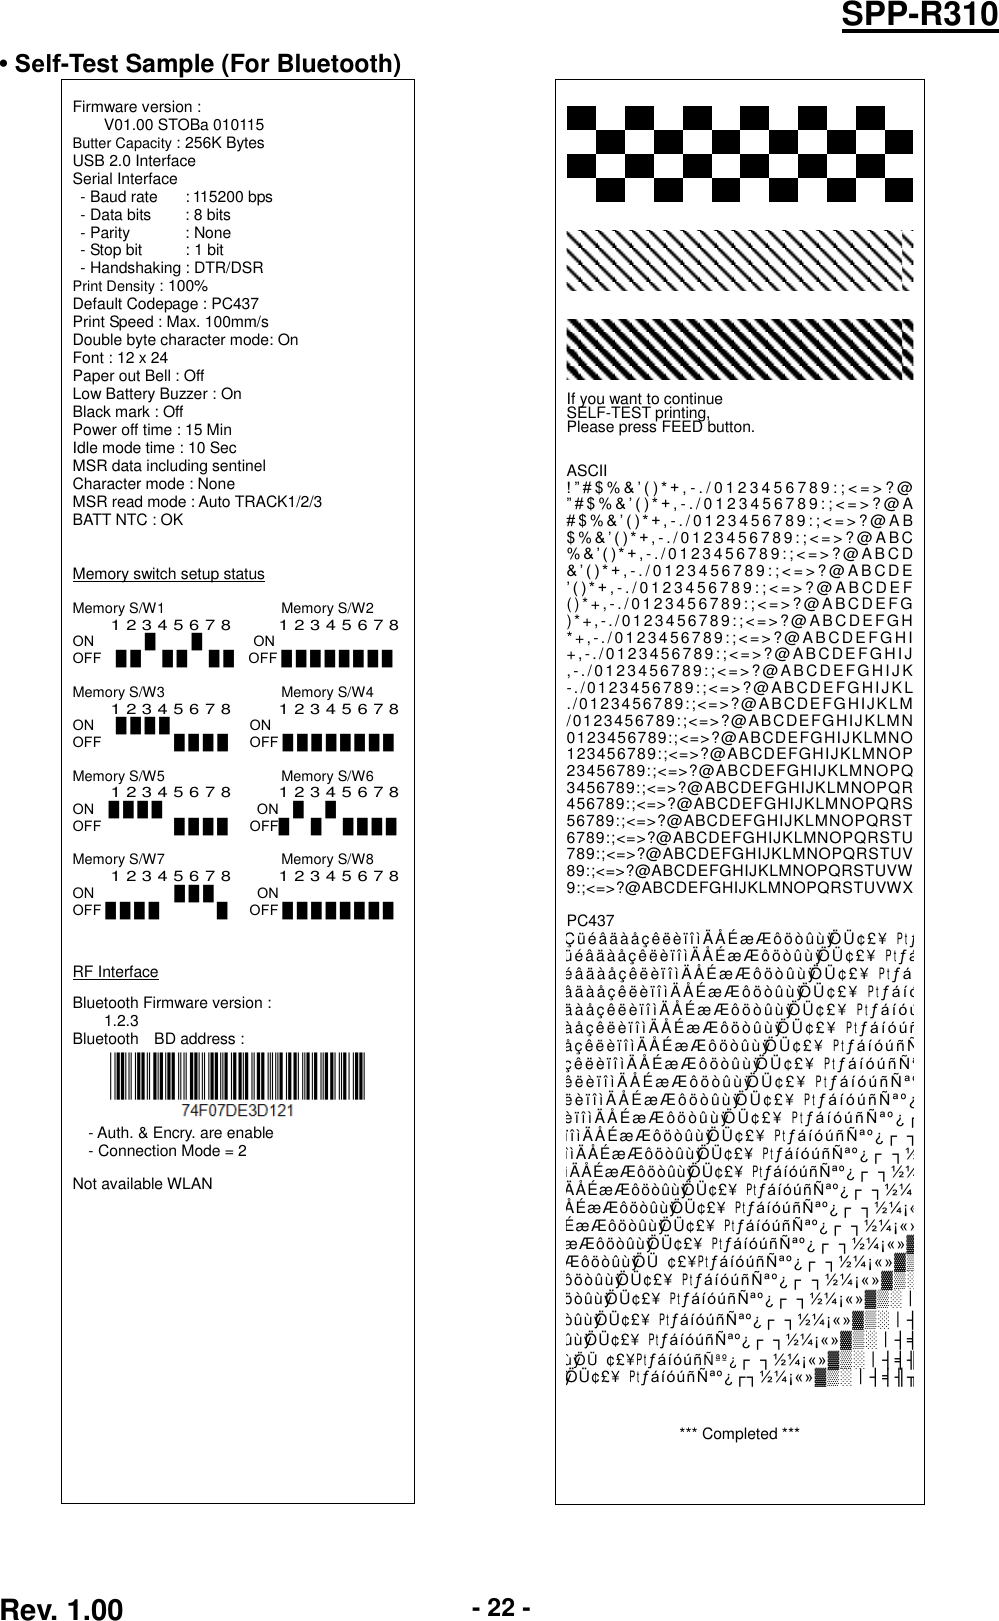  Rev. 1.00 - 22 - SPP-R310 • Self-Test Sample (For Bluetooth)   Firmware version : V01.00 STOBa 010115 Butter Capacity : 256K Bytes USB 2.0 Interface Serial Interface - Baud rate       : 115200 bps - Data bits       : 8 bits - Parity             : None - Stop bit         : 1 bit - Handshaking : DTR/DSR Print Density : 100% Default Codepage : PC437 Print Speed : Max. 100mm/s Double byte character mode: On Font : 12 x 24 Paper out Bell : Off Low Battery Buzzer : On Black mark : Off Power off time : 15 Min Idle mode time : 10 Sec MSR data including sentinel Character mode : None MSR read mode : Auto TRACK1/2/3 BATT NTC : OK   Memory switch setup status  Memory S/W1                                Memory S/W2 1 2 3 4 5 6 7 8          1 2 3 4 5 6 7 8 ON       █     █       ON OFF    █ █      █ █      █ █    OFF █ █ █ █ █ █ █ █  Memory S/W3                                Memory S/W4 1 2 3 4 5 6 7 8          1 2 3 4 5 6 7 8 ON      █ █ █ █                      ON OFF                    █ █ █ █      OFF █ █ █ █ █ █ █ █  Memory S/W5                                Memory S/W6   1 2 3 4 5 6 7 8          1 2 3 4 5 6 7 8 ON    █ █ █ █                          ON    █      █ OFF                    █ █ █ █      OFF█      █      █ █ █ █  Memory S/W7                                Memory S/W8 1 2 3 4 5 6 7 8          1 2 3 4 5 6 7 8 ON           █ █ █            ON OFF █ █ █ █                █      OFF █ █ █ █ █ █ █ █    RF Interface  Bluetooth Firmware version :         1.2.3 Bluetooth    BD address :  - Auth. &amp; Encry. are enable - Connection Mode = 2  Not available WLAN                                                         If you want to continue SELF-TEST printing, Please press FEED button.   ASCII ! ” # $ % &amp; ’ ( ) * + , - . / 0 1 2 3 4 5 6 7 8 9 : ; &lt; = &gt; ? @ ”#$%&amp;’()*+,- . / 0 1 2 3 4 5 6 7 8 9 : ; &lt; = &gt; ? @ A # $ % &amp; ’ ( ) * + , - . / 0 1 2 3 4 5 6 7 8 9 : ; &lt; = &gt; ? @ A B $ % &amp; ’ ( ) * + , - . / 0 1 2 3 4 5 6 7 8 9: ; &lt;= &gt; ? @ A B C % &amp; ’ ( ) * + , - . / 0 1 23 4 5 6 78 9 : ; &lt; = &gt; ? @ A B CD &amp; ’ ( ) * + , - . / 0 1 2 3 4 5 6 7 8 9 : ; &lt; = &gt; ? @ A B C D E ’ ( ) * + , - . / 0 1 2 3 4 5 6 7 8 9 : ; &lt; = &gt; ? @ A B C D E F ( ) * + , - . / 01 2 3 4 56 7 8 9 :; &lt; =&gt; ? @A B C DE FG )* +, - ./ 012 3 45 6 78 9:; &lt;= &gt; ?@ ABC DE F GH *+ ,- . / 01 2 34 567 89: ;&lt; = &gt; ?@A B C D EFG HI +,-. /0 1 234 5 678 9 :; &lt;=&gt; ?@A B CDE FGHI J ,- ./ 0 123 4 567 89:;&lt; =&gt;? @A BCDE FGHI J K -./01 2 3 456789:;&lt;=&gt; ?@AB CD EFGHIJKL ./01234567 89:;&lt;=&gt;?@A B CDEFG HIJKLM /0123456789:;&lt;=&gt;?@ABCDEFGHIJKLMN 0123456789:;&lt;=&gt;?@ABCDEFGHIJKLMNO 123456789:;&lt;=&gt;?@ABCDEFGHIJKLMNOP 23456789:;&lt;=&gt;?@ABCDEFGHIJKLMNOPQ 3456789:;&lt;=&gt;?@ABCDEFGHIJKLMNOPQR 456789:;&lt;=&gt;?@ABCDEFGHIJKLMNOPQRS 56789:;&lt;=&gt;?@ABCDEFGHIJKLMNOPQRST 6789:;&lt;=&gt;?@ABCDEFGHIJKLMNOPQRSTU 789:;&lt;=&gt;?@ABCDEFGHIJKLMNOPQRSTUV 89:;&lt;=&gt;?@ABCDEFGHIJKLMNOPQRSTUVW 9:;&lt;=&gt;?@ABCDEFGHIJKLMNOPQRSTUVWX  PC437 Ç ü é â ä à å ç ê ëè ïîìÄ Å É æ Æ ô ö ò û ù ÿÖ Ü ¢ £ ¥Ptƒ ü é â ä à å çê ë è ïîìÄ Å É æ Æ ô ö ò û ù ÿÖ Ü ¢ £ ¥Ptƒá é â ä à å çê ë è ïîìÄ Å É æ Æ ô ö ò û ù ÿÖ Ü ¢ £ ¥Ptƒáí â ä à å çê ë è ïîìÄ Å É æ Æ ô ö ò û ùÿÖ Ü ¢ £ ¥Ptƒá í ó ä à å çê ë è ïîìÄ Å É æ Æ ô ö ò û ù ÿÖ Ü ¢ £ ¥Ptƒáíóú à å çê ë è ïîìÄ Å É æ Æ ô ö ò û ù ÿÖ Ü ¢ £ ¥Ptƒá í óúñ å ç ê ë è ïîìÄ Å É æ Æ ô ö ò û ù ÿÖ Ü ¢ £ ¥Ptƒáíóú ñ Ñ ç ê ë è ïîìÄ Å É æ Æ ô ö ò û ù ÿÖ Ü ¢ £ ¥PtƒáíóúñÑª ê ë è ïîìÄ Å É æ Æ ô ö ò û ù ÿÖ Ü ¢ £ ¥PtƒáíóúñÑªº ë è ïîìÄ Å É æ Æ ô ö ò û ù ÿÖ Ü ¢ £ ¥Ptƒá í óúñ Ñªº¿ è ïîìÄ Å É æ Æ ô ö ò û ù ÿÖ Ü ¢ £ ¥Ptƒáí ó ú ñÑªº¿ ┌ ïîìÄ Å É æ Æ ô ö ò û ù ÿÖ Ü ¢ £ ¥PtƒáíóúñÑªº¿┌ ┐ îìÄ Å É æ Æ ôö òû ùÿÖ Ü ¢£ ¥PtƒáíóúñÑªº¿┌  ┐½ ìÄ Å É æ Æ ôö ò û ùÿÖ Ü ¢ £ ¥PtƒáíóúñÑªº¿┌  ┐½¼ Ä Å É æ Æ ô ö ò ûùÿÖ Ü ¢£¥PtƒáíóúñÑªº¿┌  ┐½¼¡ Å É æ Æ ô ö ò ûùÿÖ Ü ¢ £¥PtƒáíóúñÑªº¿┌  ┐½¼¡« É æ Æ ôö ò û ùÿÖ Ü ¢£¥PtƒáíóúñÑªº¿┌  ┐½¼¡«» æ Æ ôöòûùÿÖ Ü ¢£¥PtƒáíóúñÑªº¿┌  ┐½¼¡«»▓ Æ ôö òûù ÿÖ Ü ¢£¥PtƒáíóúñÑªº¿┌  ┐½¼¡«»▓▒ ôöòûùÿÖ Ü ¢£¥PtƒáíóúñÑªº¿┌  ┐½¼¡«»▓▒░ öò û ù ÿÖ Ü ¢£¥PtƒáíóúñÑªº¿┌  ┐½¼¡«»▓▒░┃ òûùÿÖ Ü ¢£¥PtƒáíóúñÑªº¿┌  ┐½¼¡«»▓▒░┃┤ ûùÿÖ Ü ¢£¥PtƒáíóúñÑªº¿┌  ┐½¼¡«»▓▒░┃┤╡ ùÿÖ Ü ¢£¥PtƒáíóúñÑ ªº¿ ┌  ┐½¼¡«»▓▒░┃┤╡╢ ÿÖ Ü ¢£¥PtƒáíóúñÑªº¿┌┐½¼¡«»▓▒░┃┤╡╢╖    *** Completed ***    